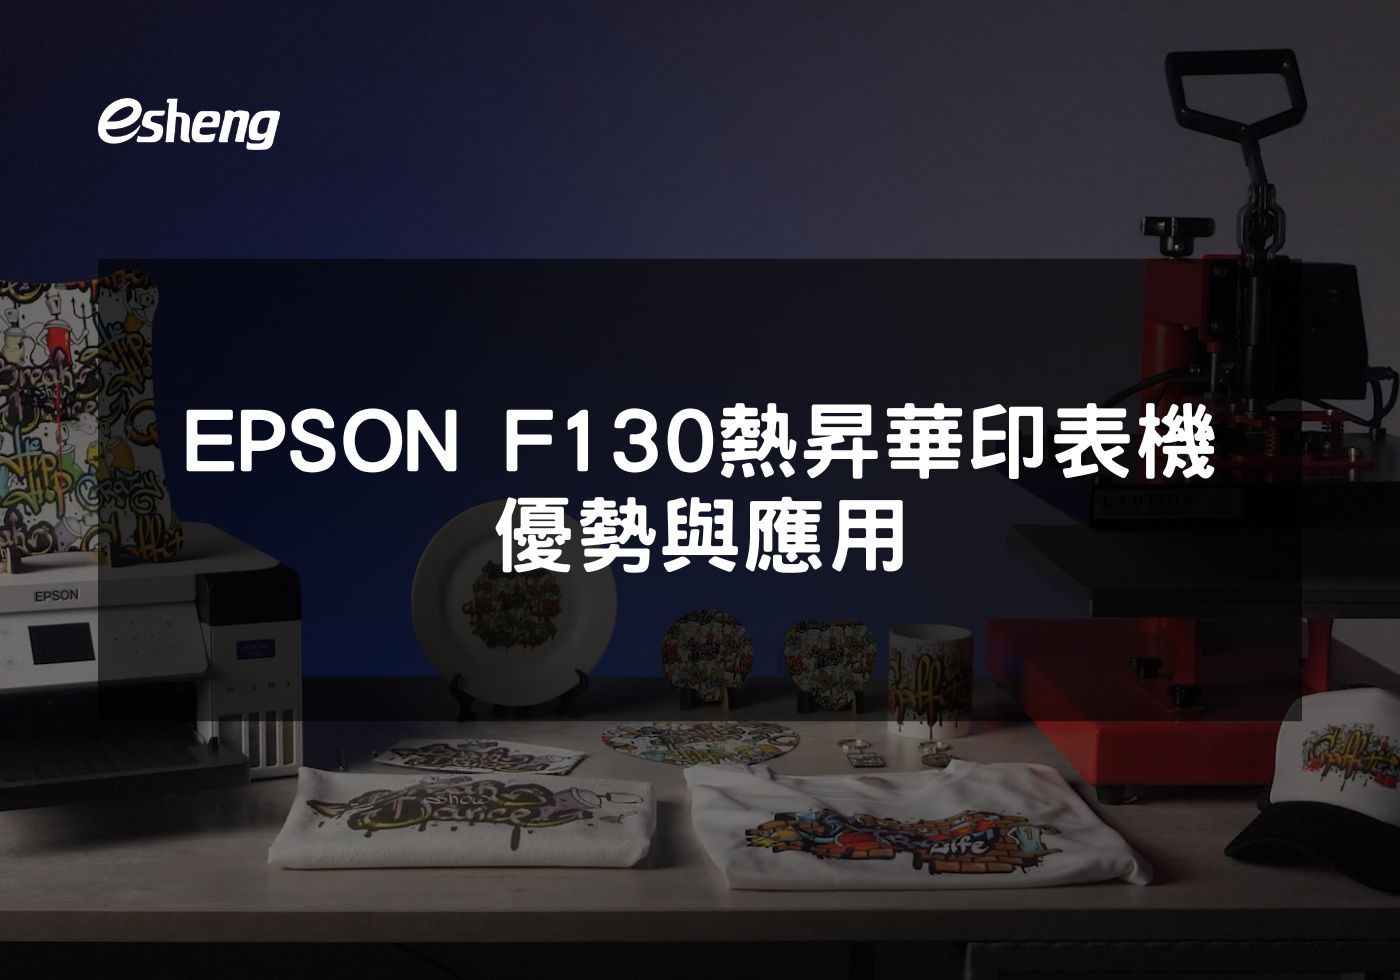 EPSON F130熱昇華印表機提升小型企業的打印效率